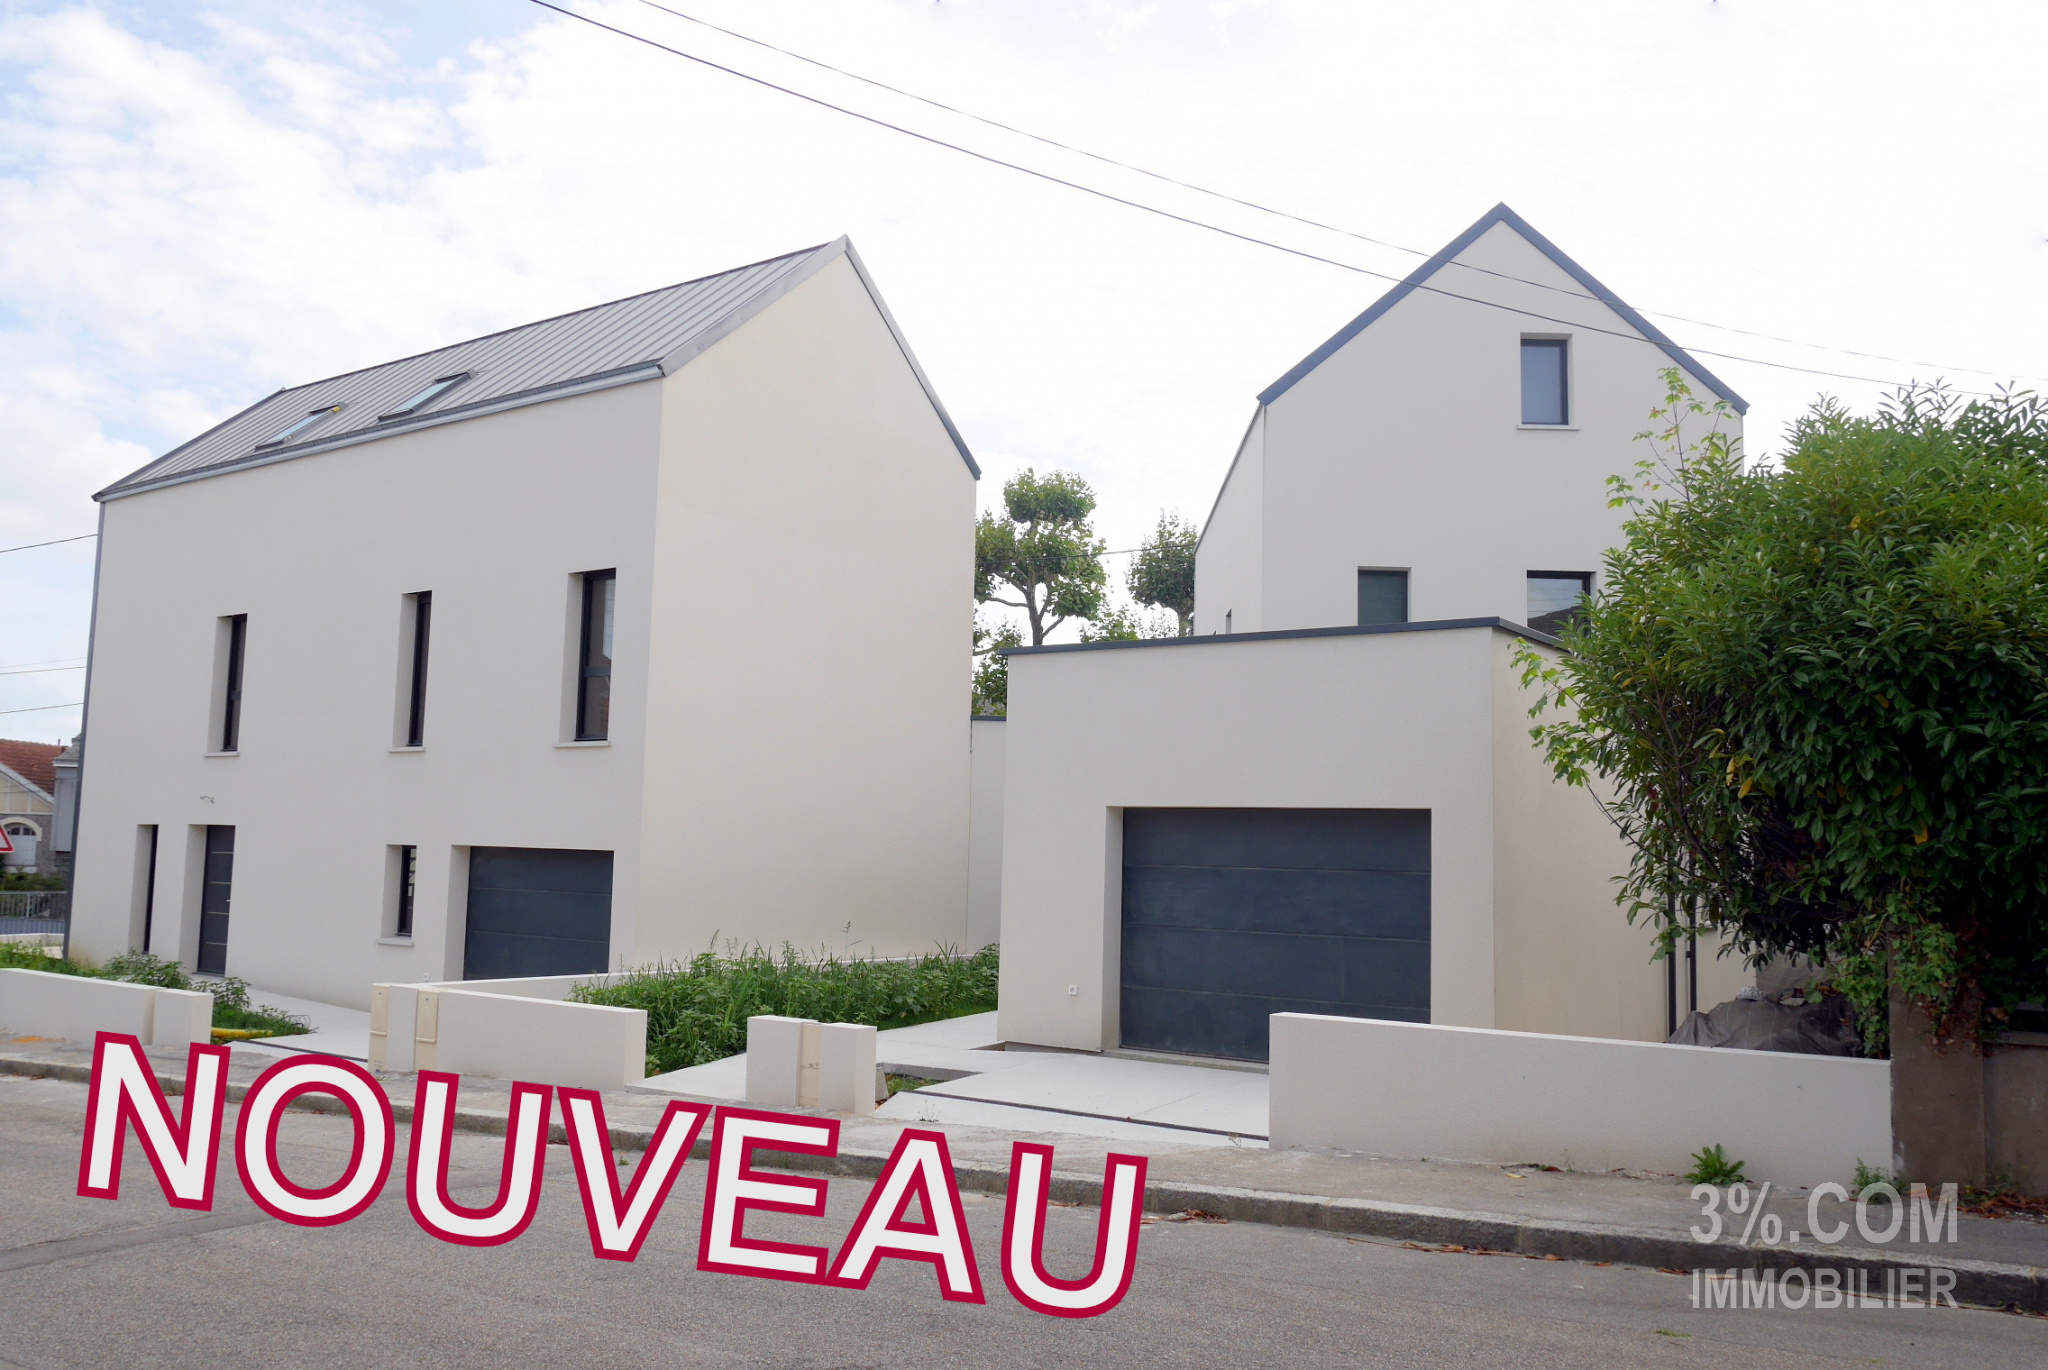 Vente Maison 167m² 7 Pièces à Nantes (44100) - 3%.Com